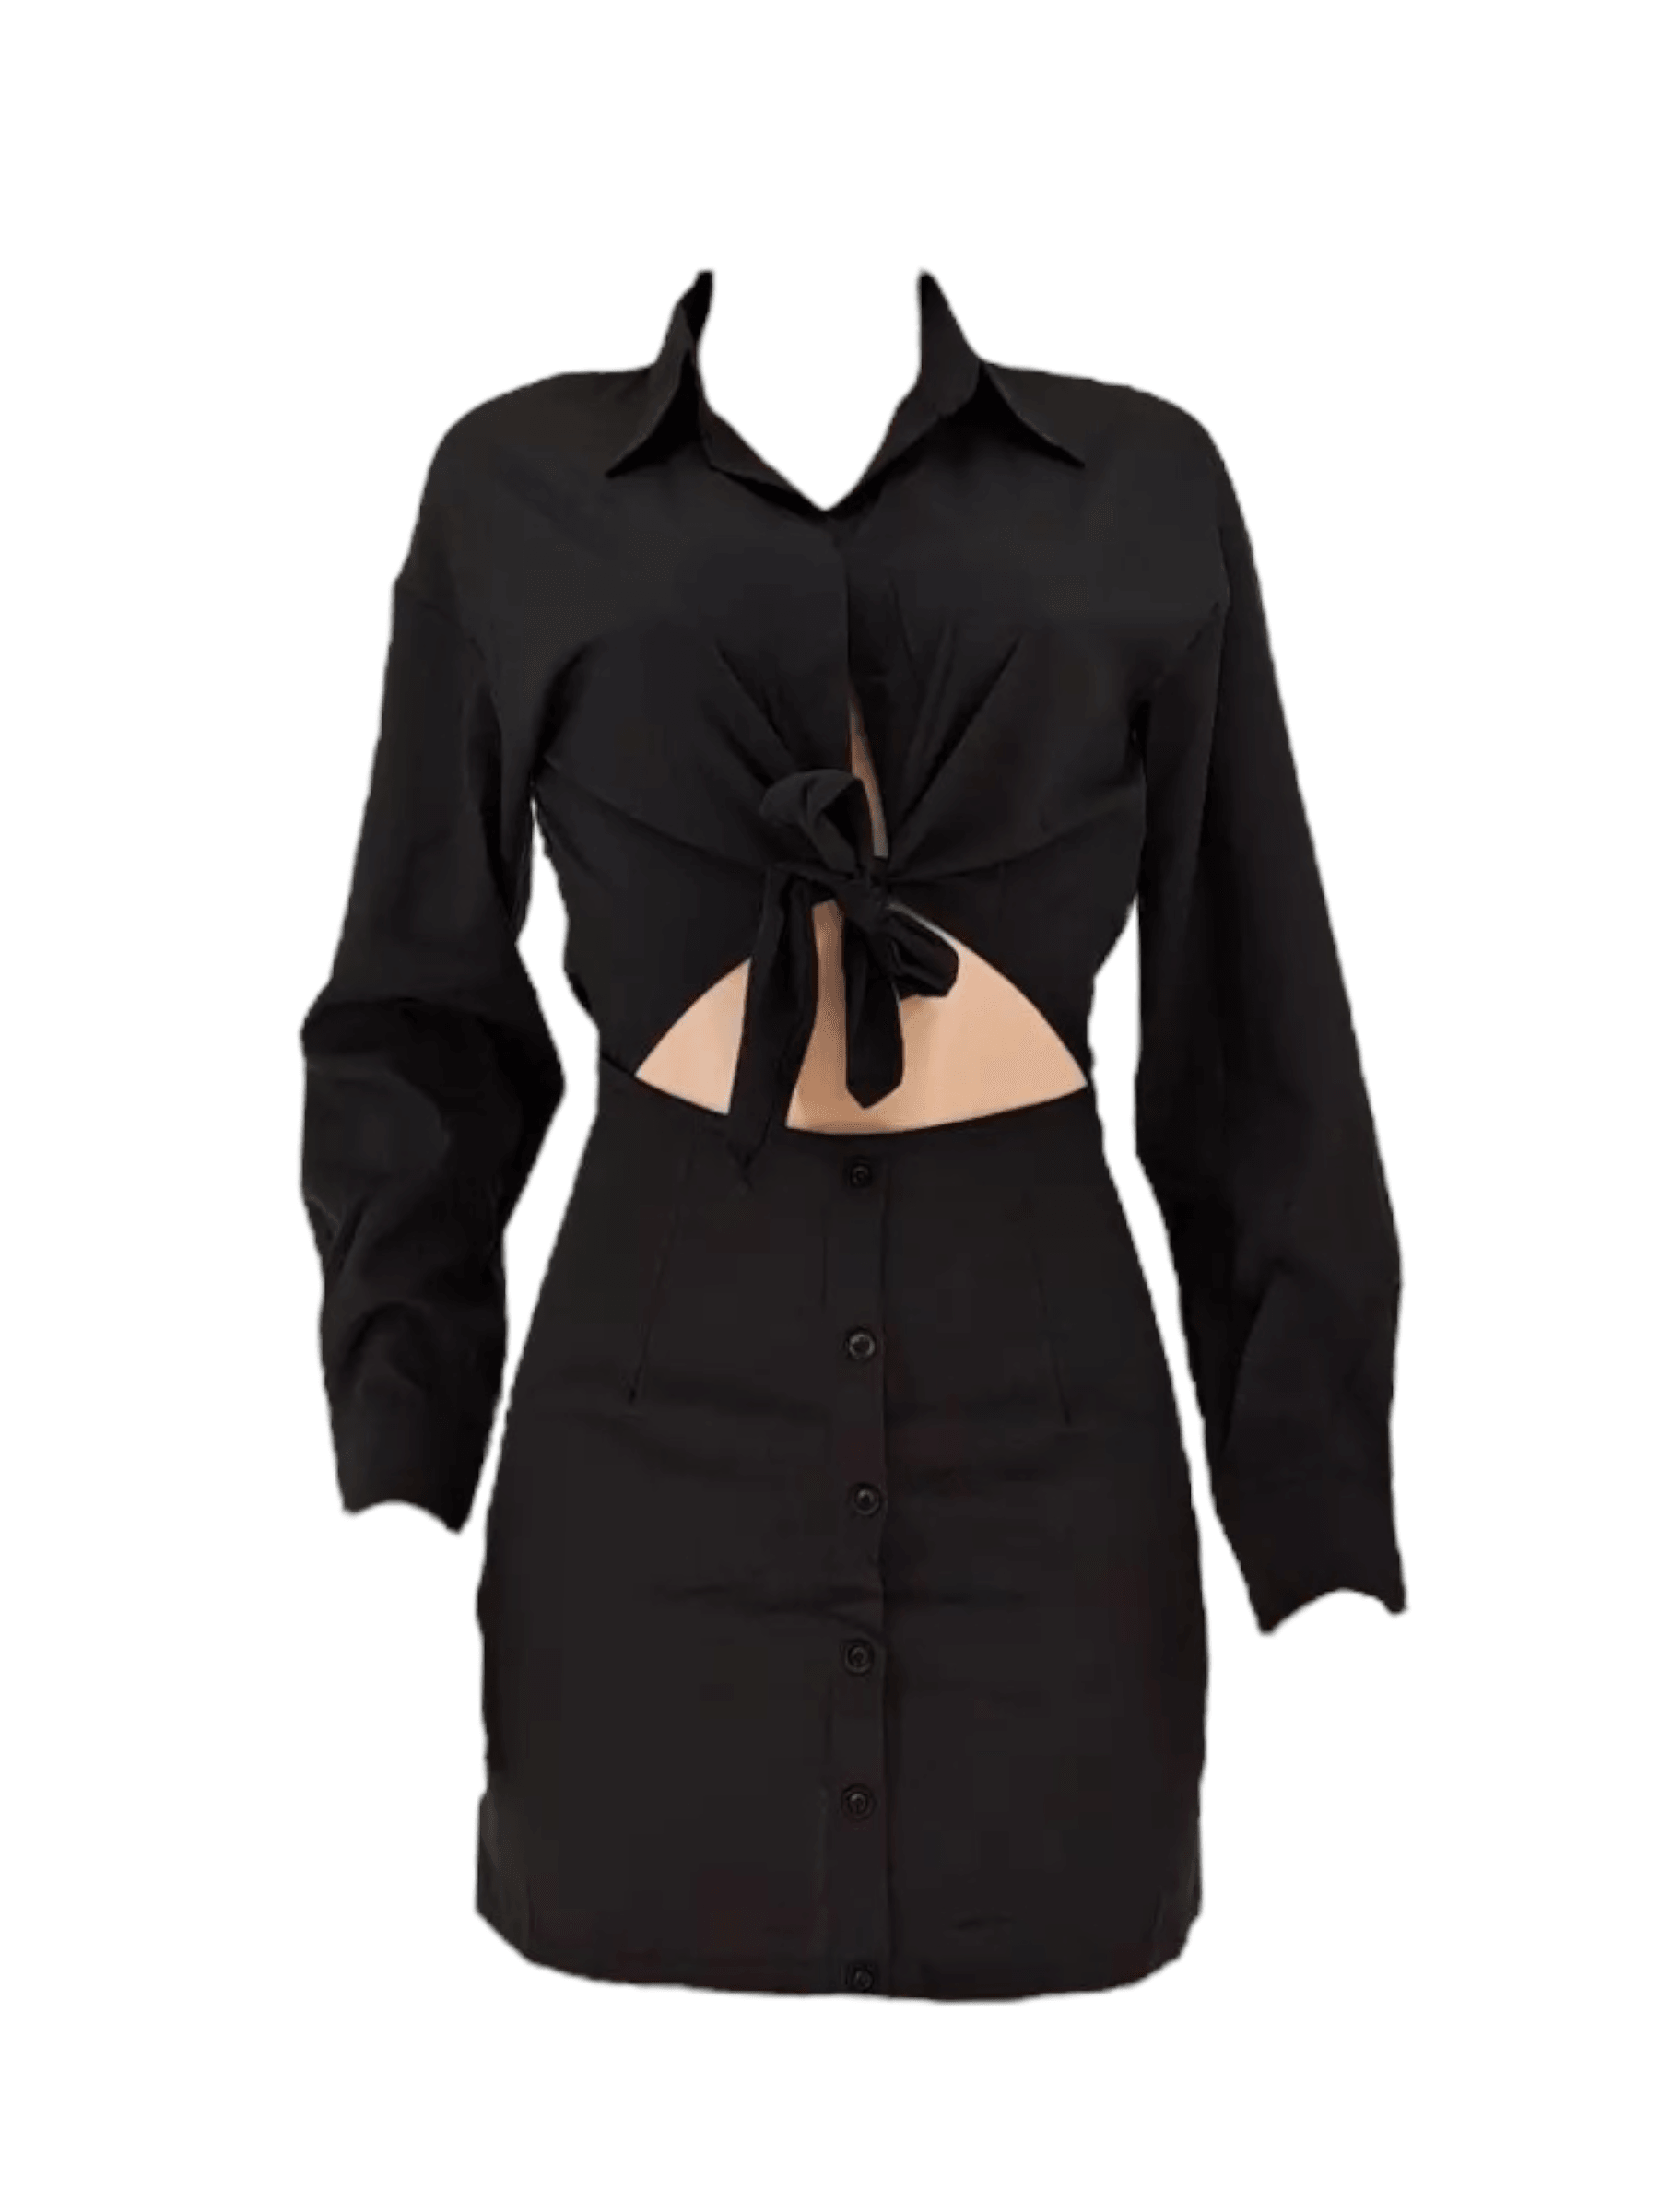 Turn-Down Collar Blouse Mini Dress Black / S